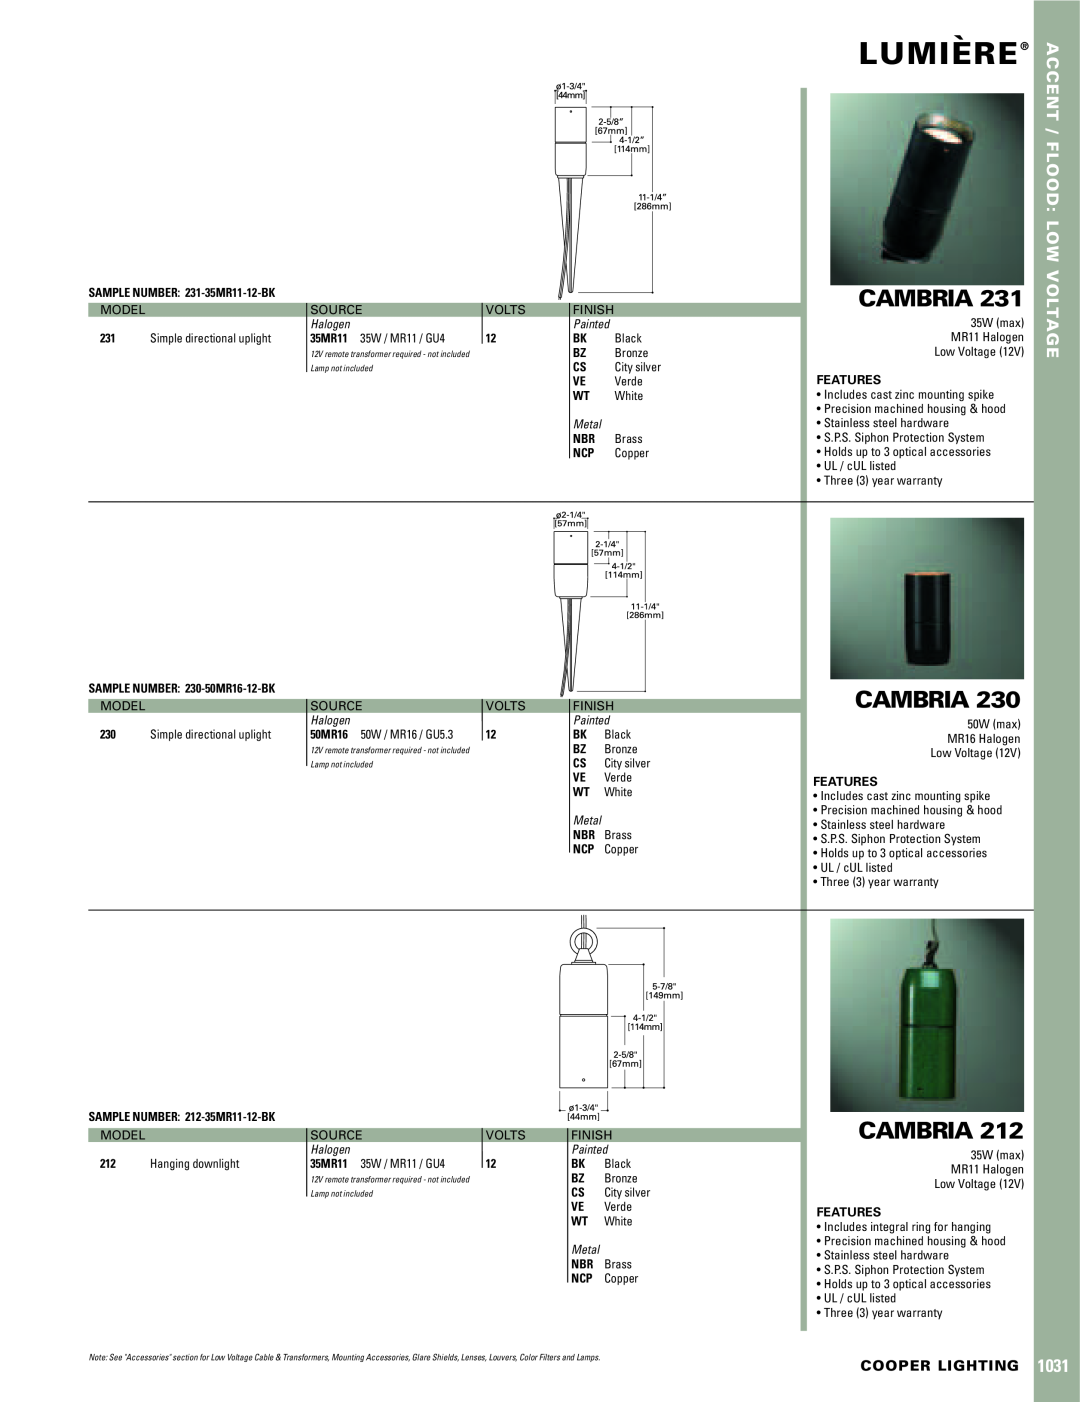 Cooper Lighting Cambria 212 warranty Lumiere`, Accent / Flood Low Voltage, Cooper Lighting, Halogen, Painted, Metal 